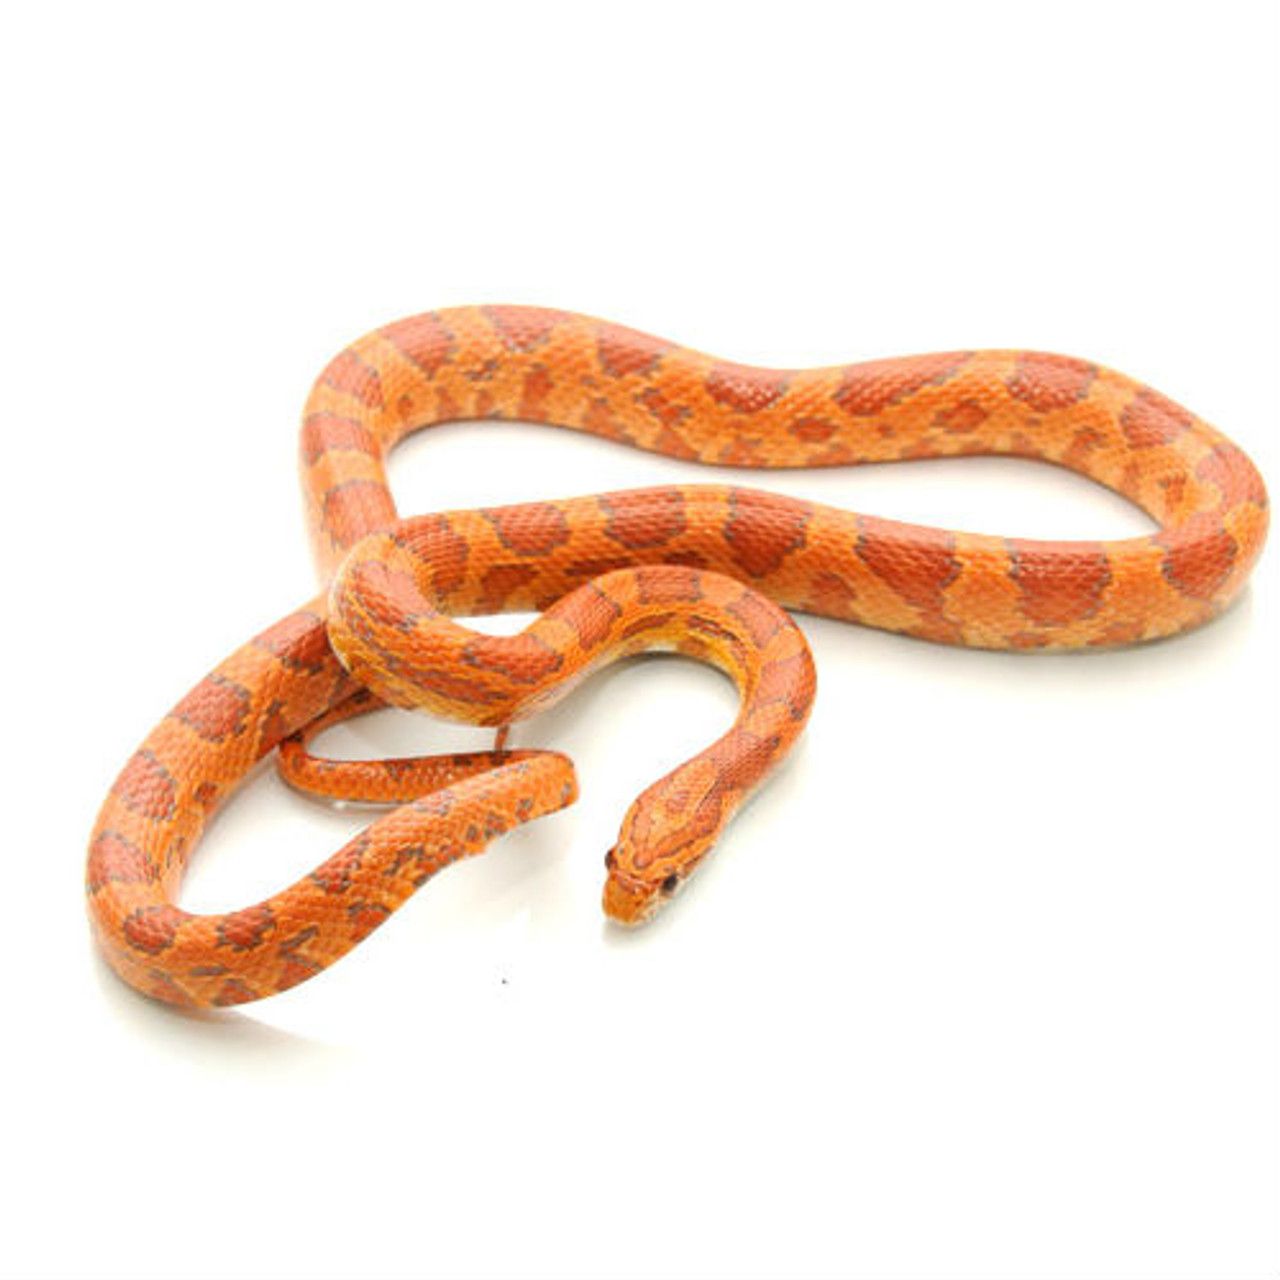 ultramel corn snake